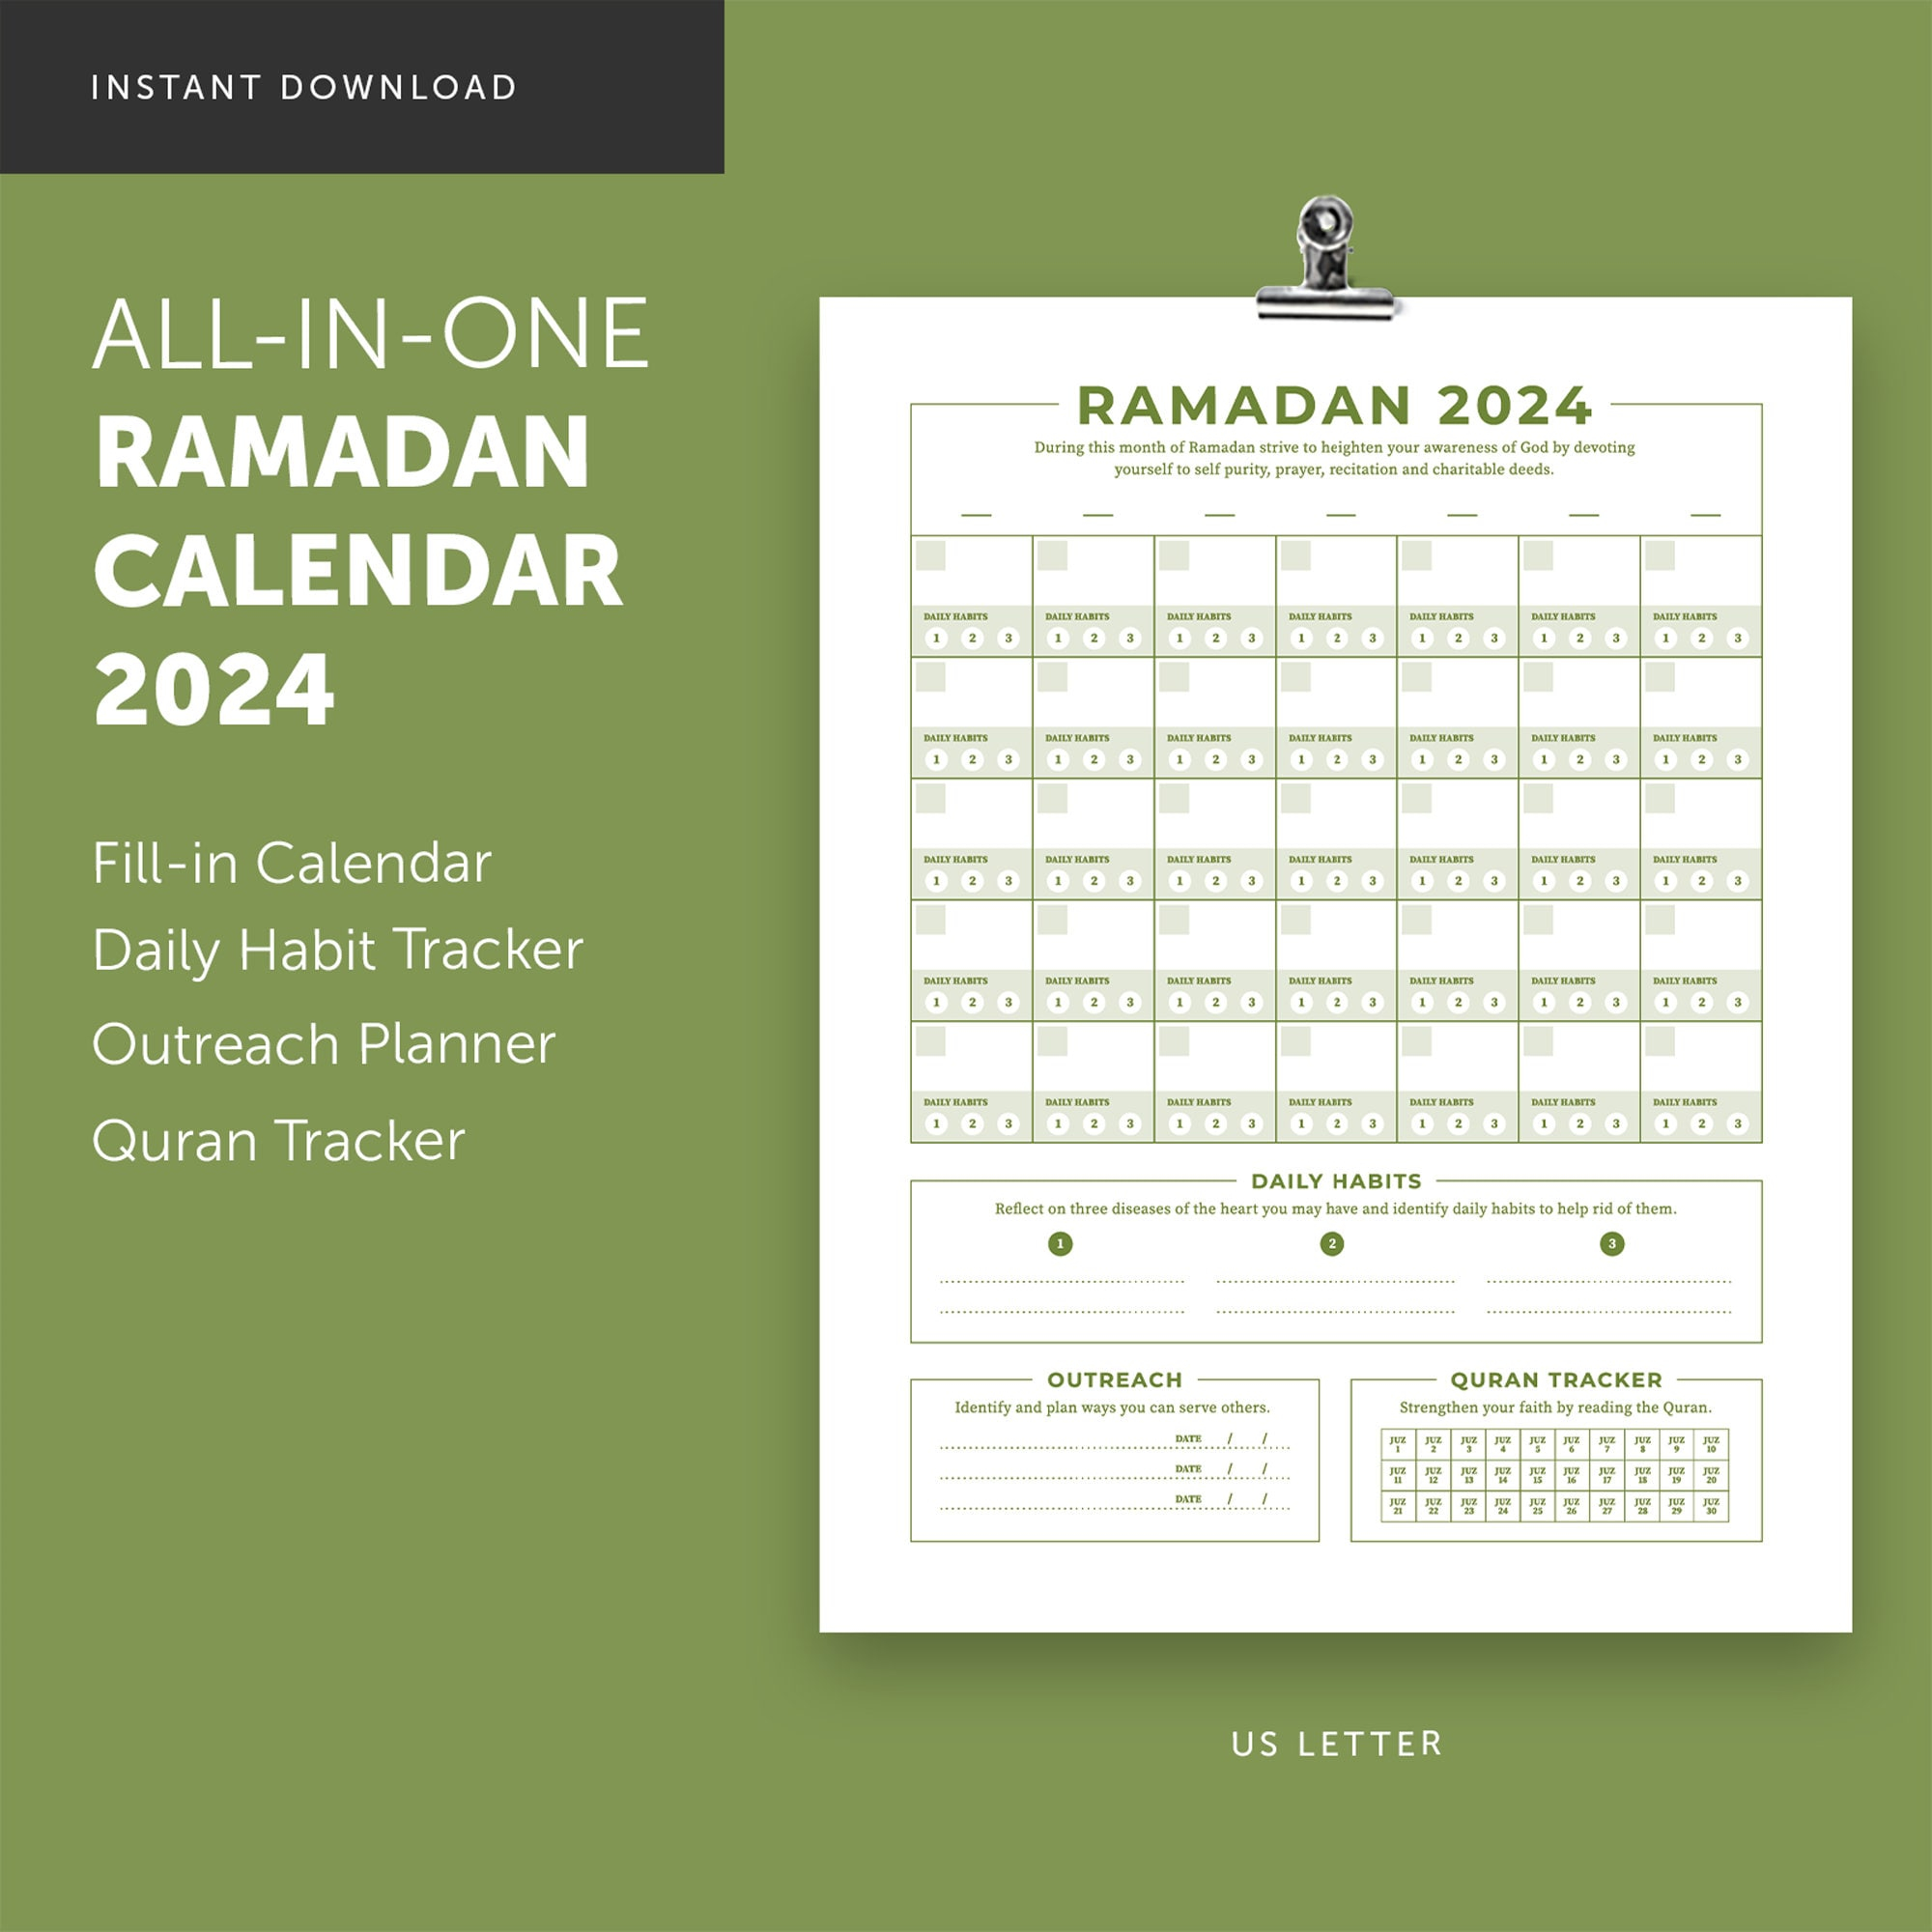 All-In-One Ramadan 2024 Calendar/Planner - Etsy for Ramadan 2024 Calendar Printable